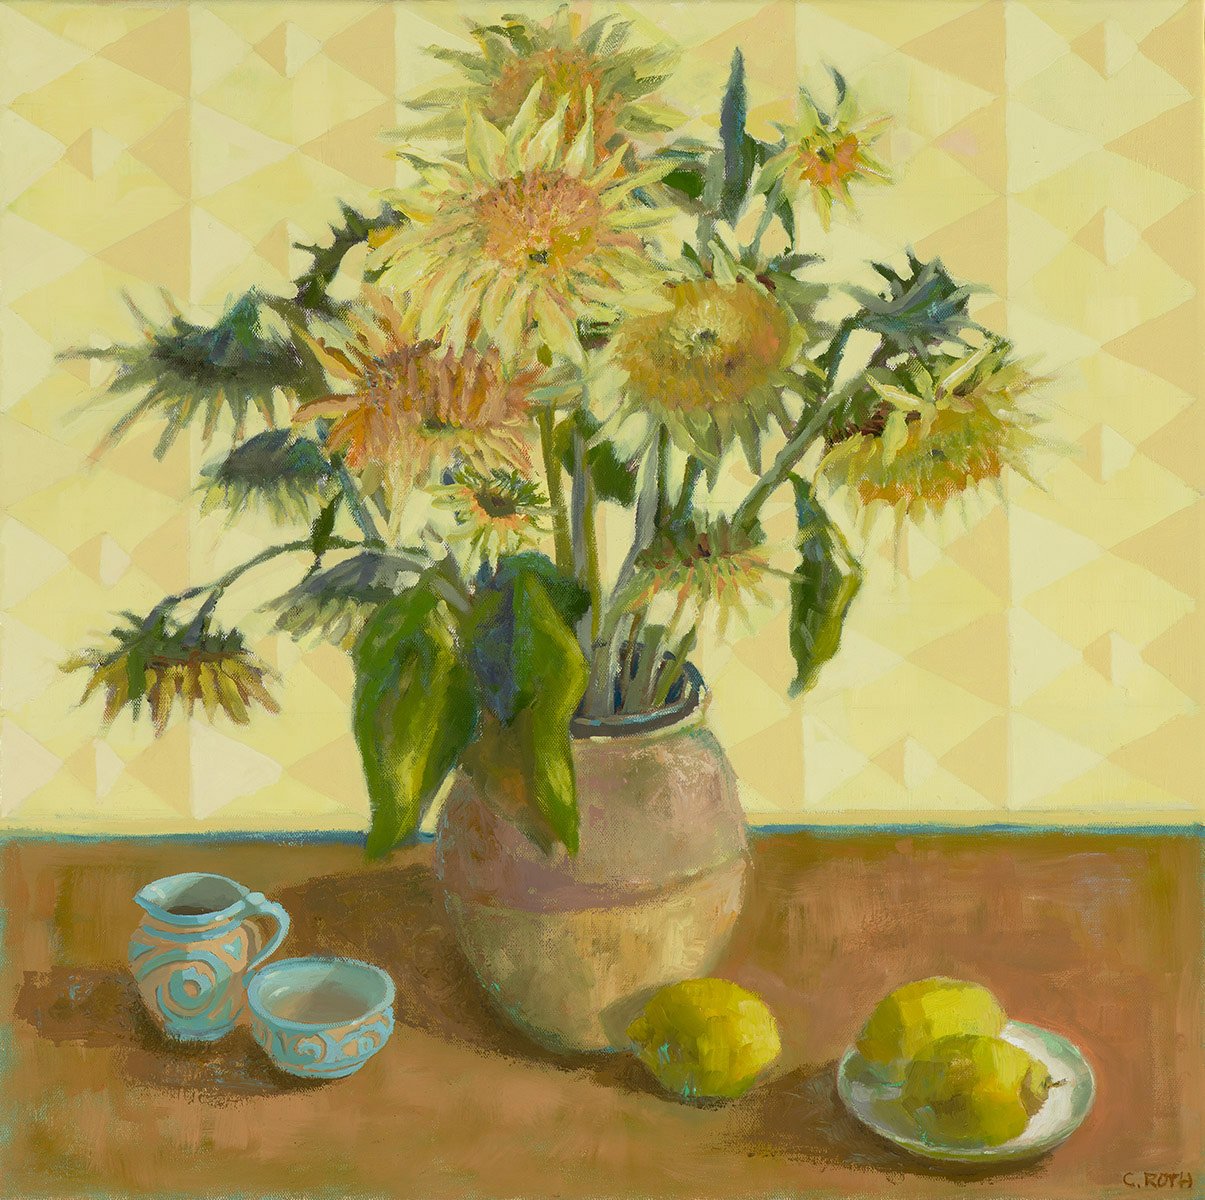 Sunflower Still Life by Carla Roth